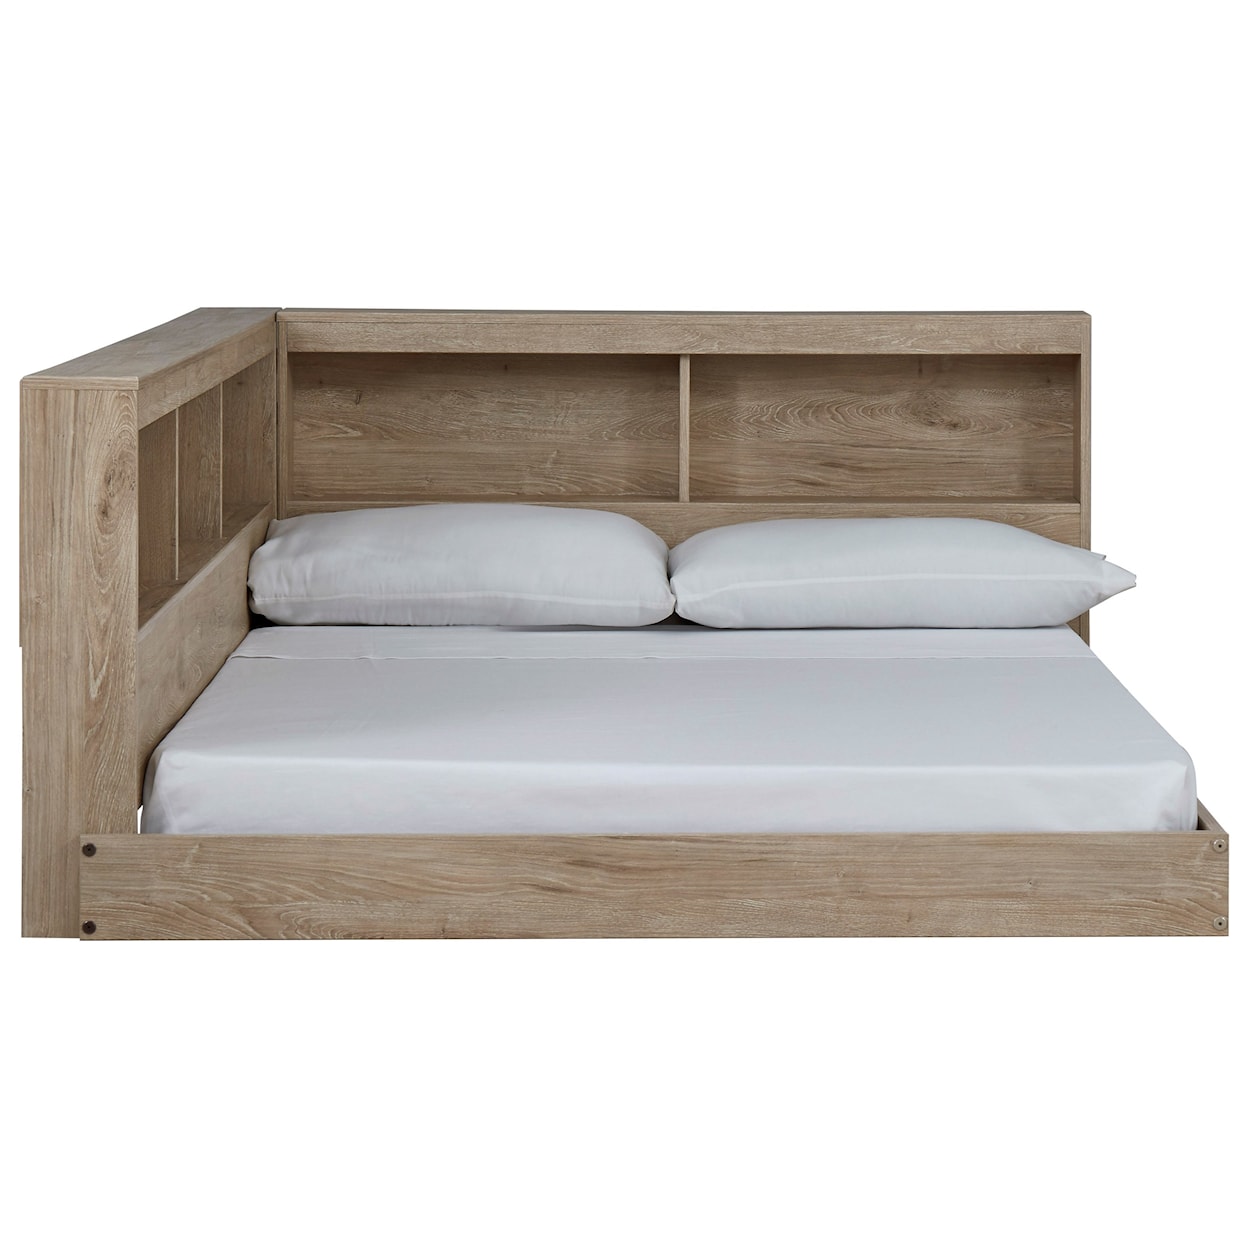 Ashley Furniture Signature Design Oliah Full Bookcase Bed